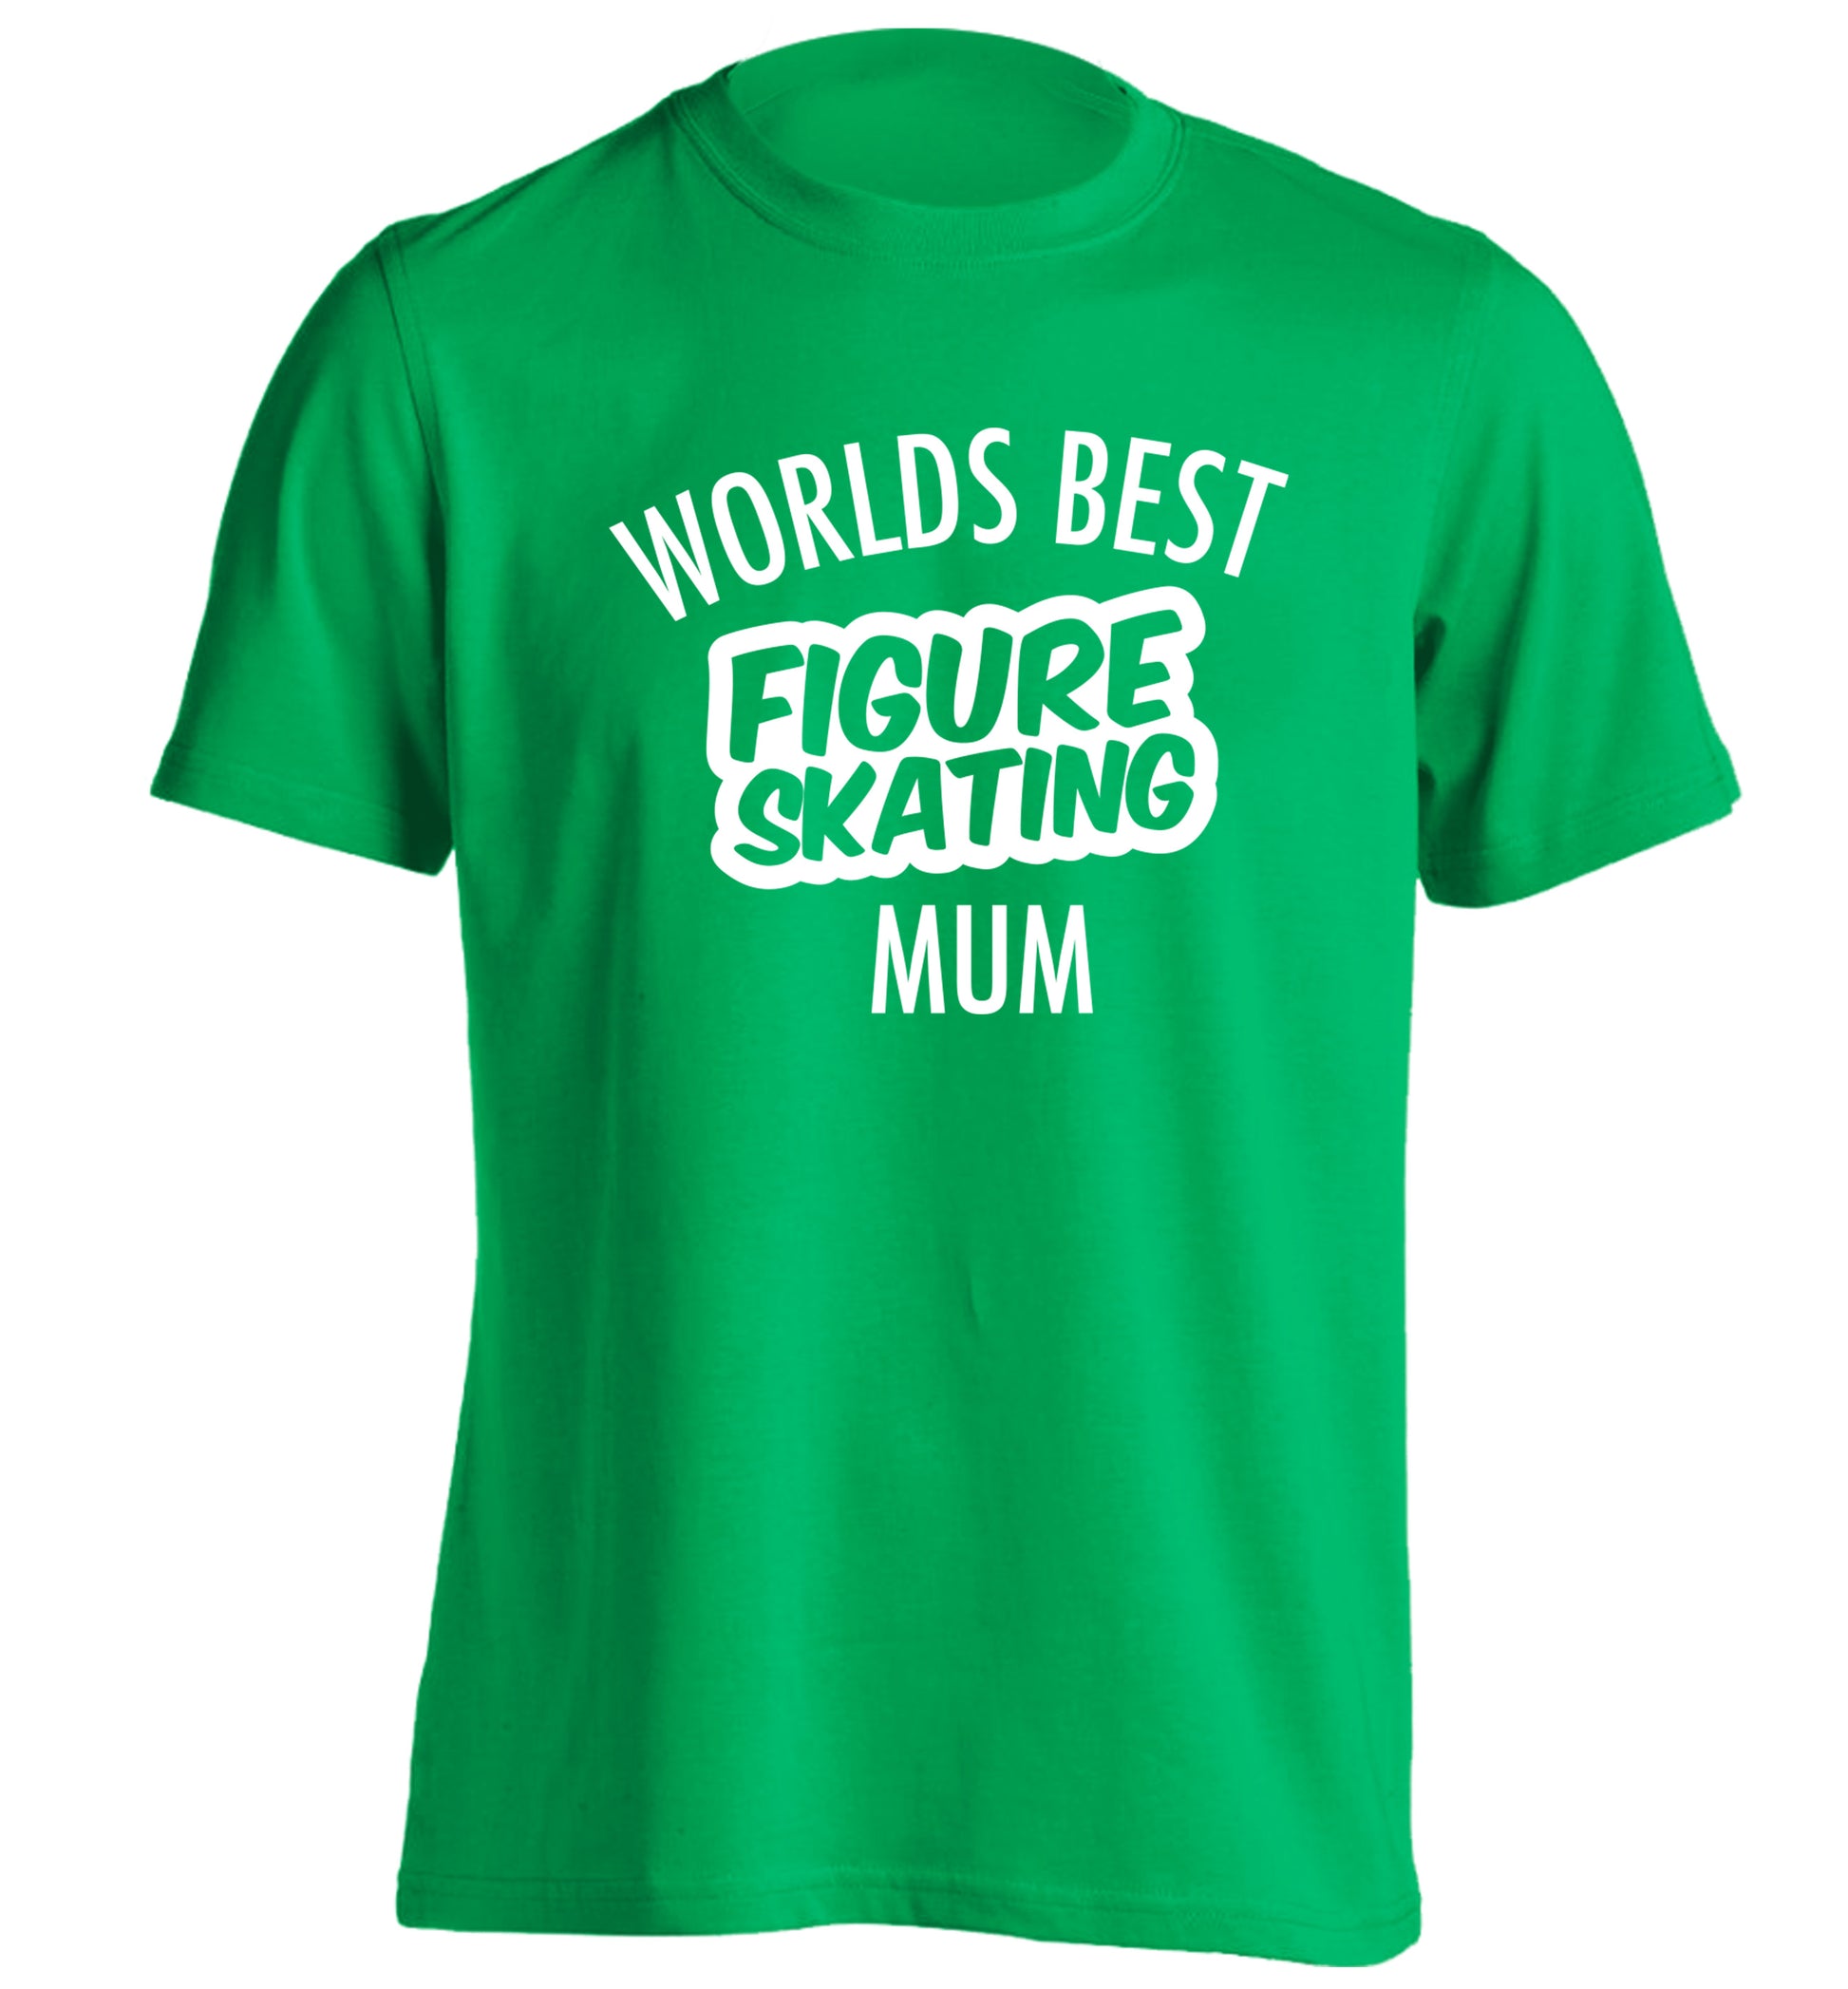 Worlds best figure skating mum adults unisexgreen Tshirt 2XL